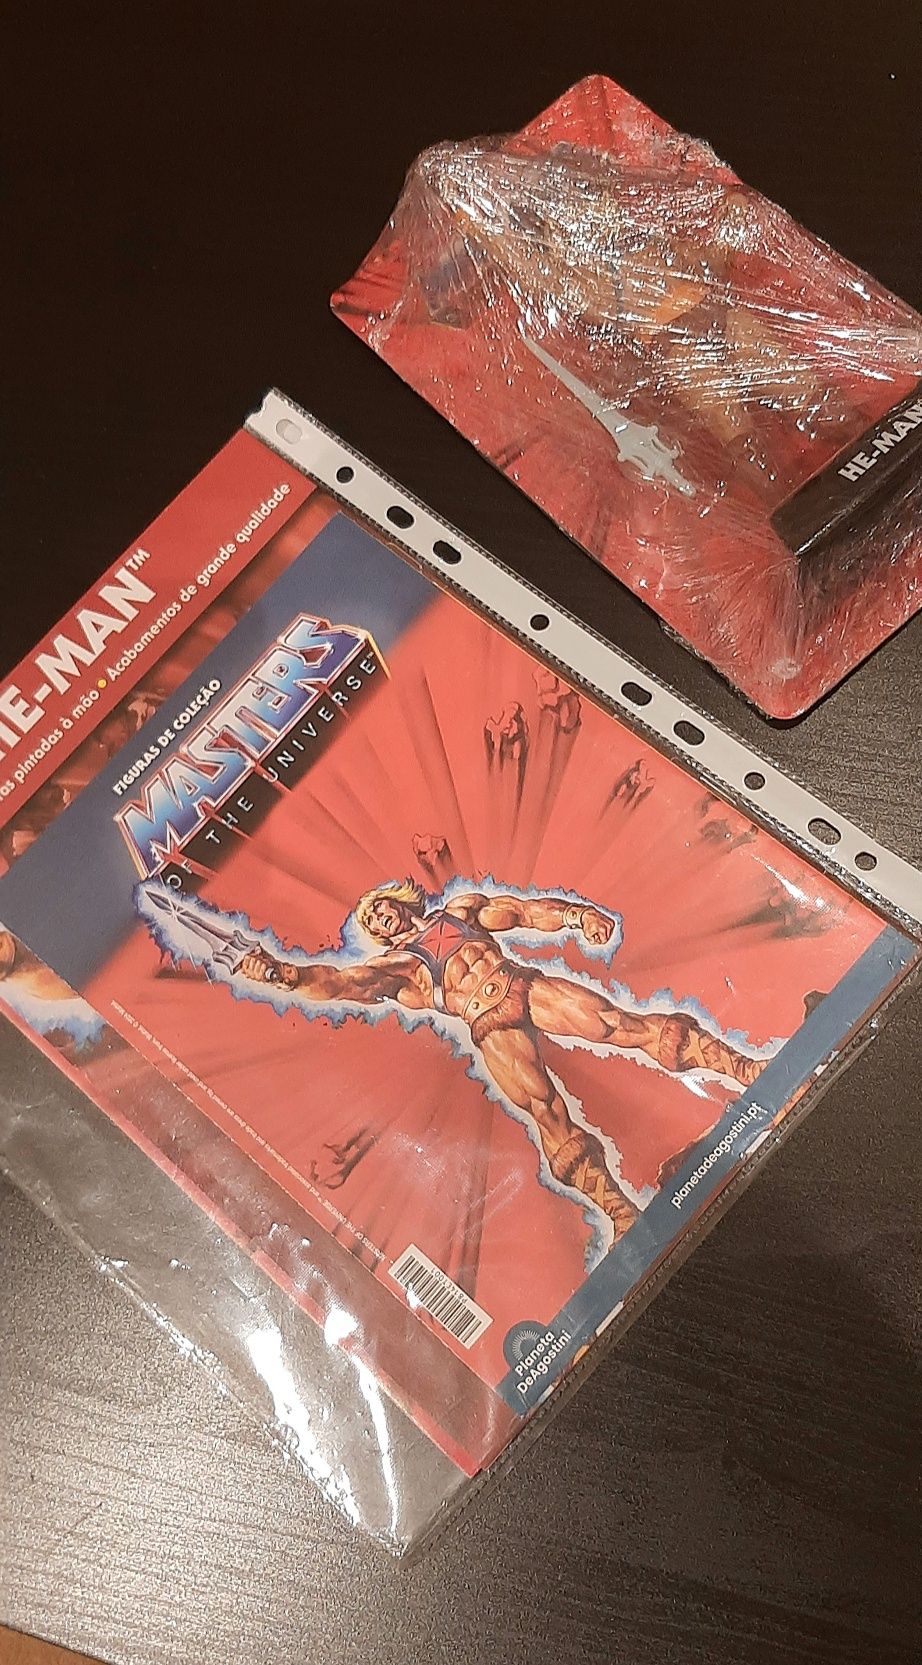 Masters of The Universe He-Man + Revista e poster incluídos.